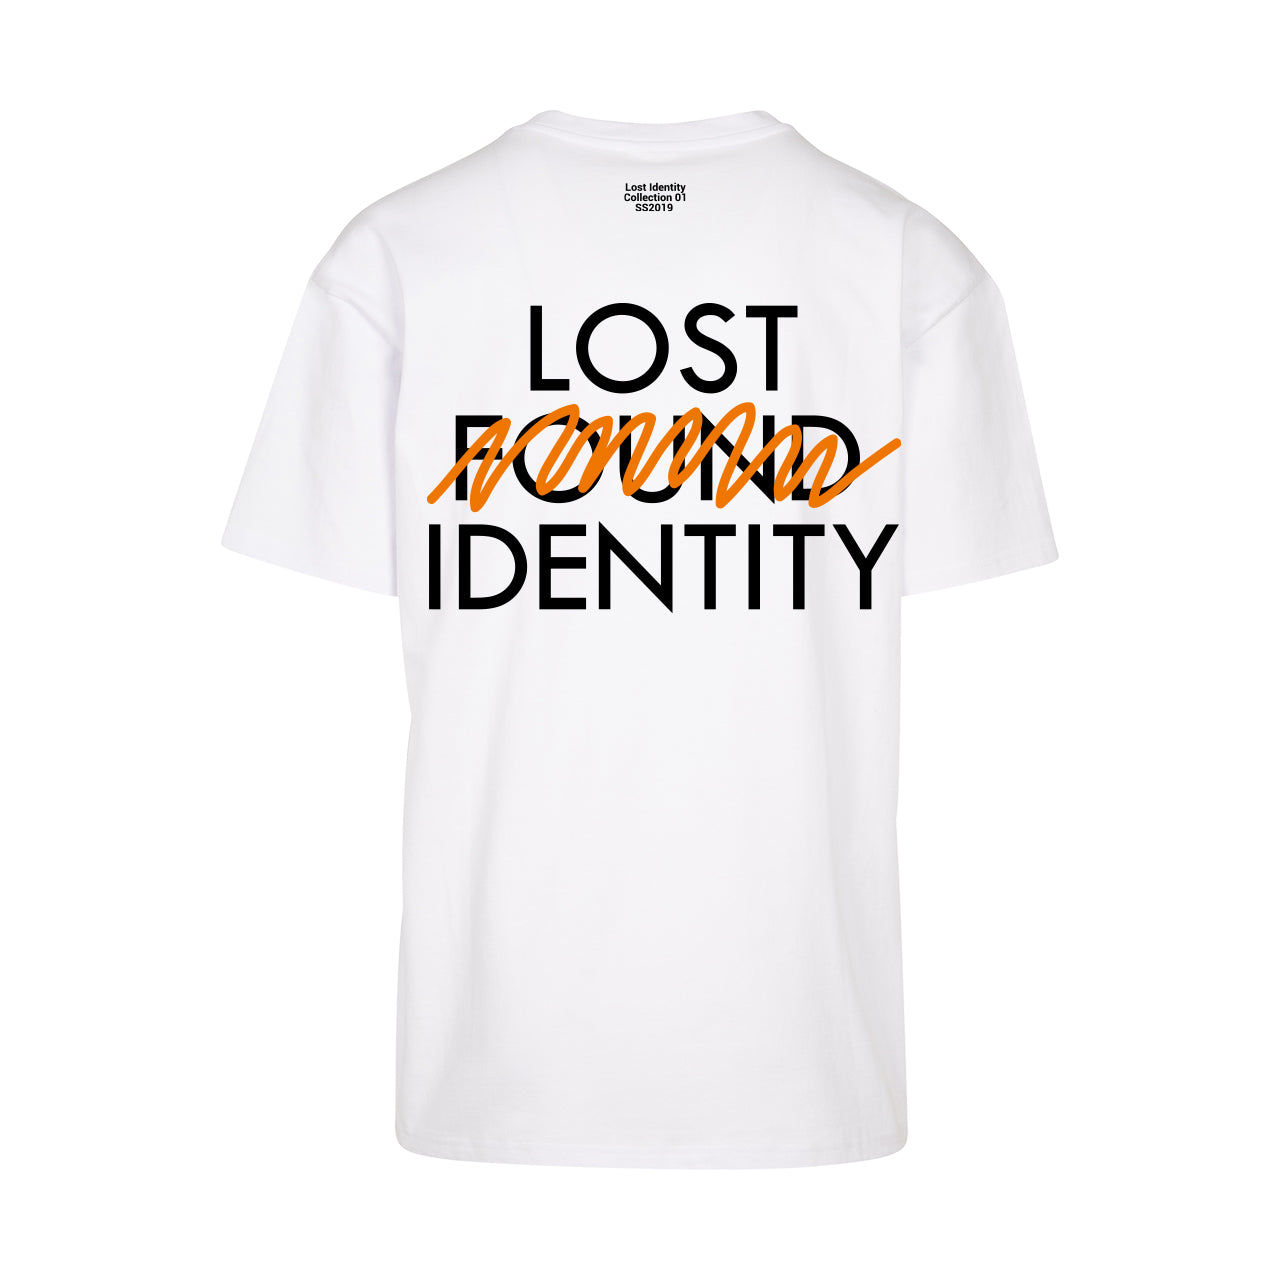 Lost Identity - Lost Found Shirt